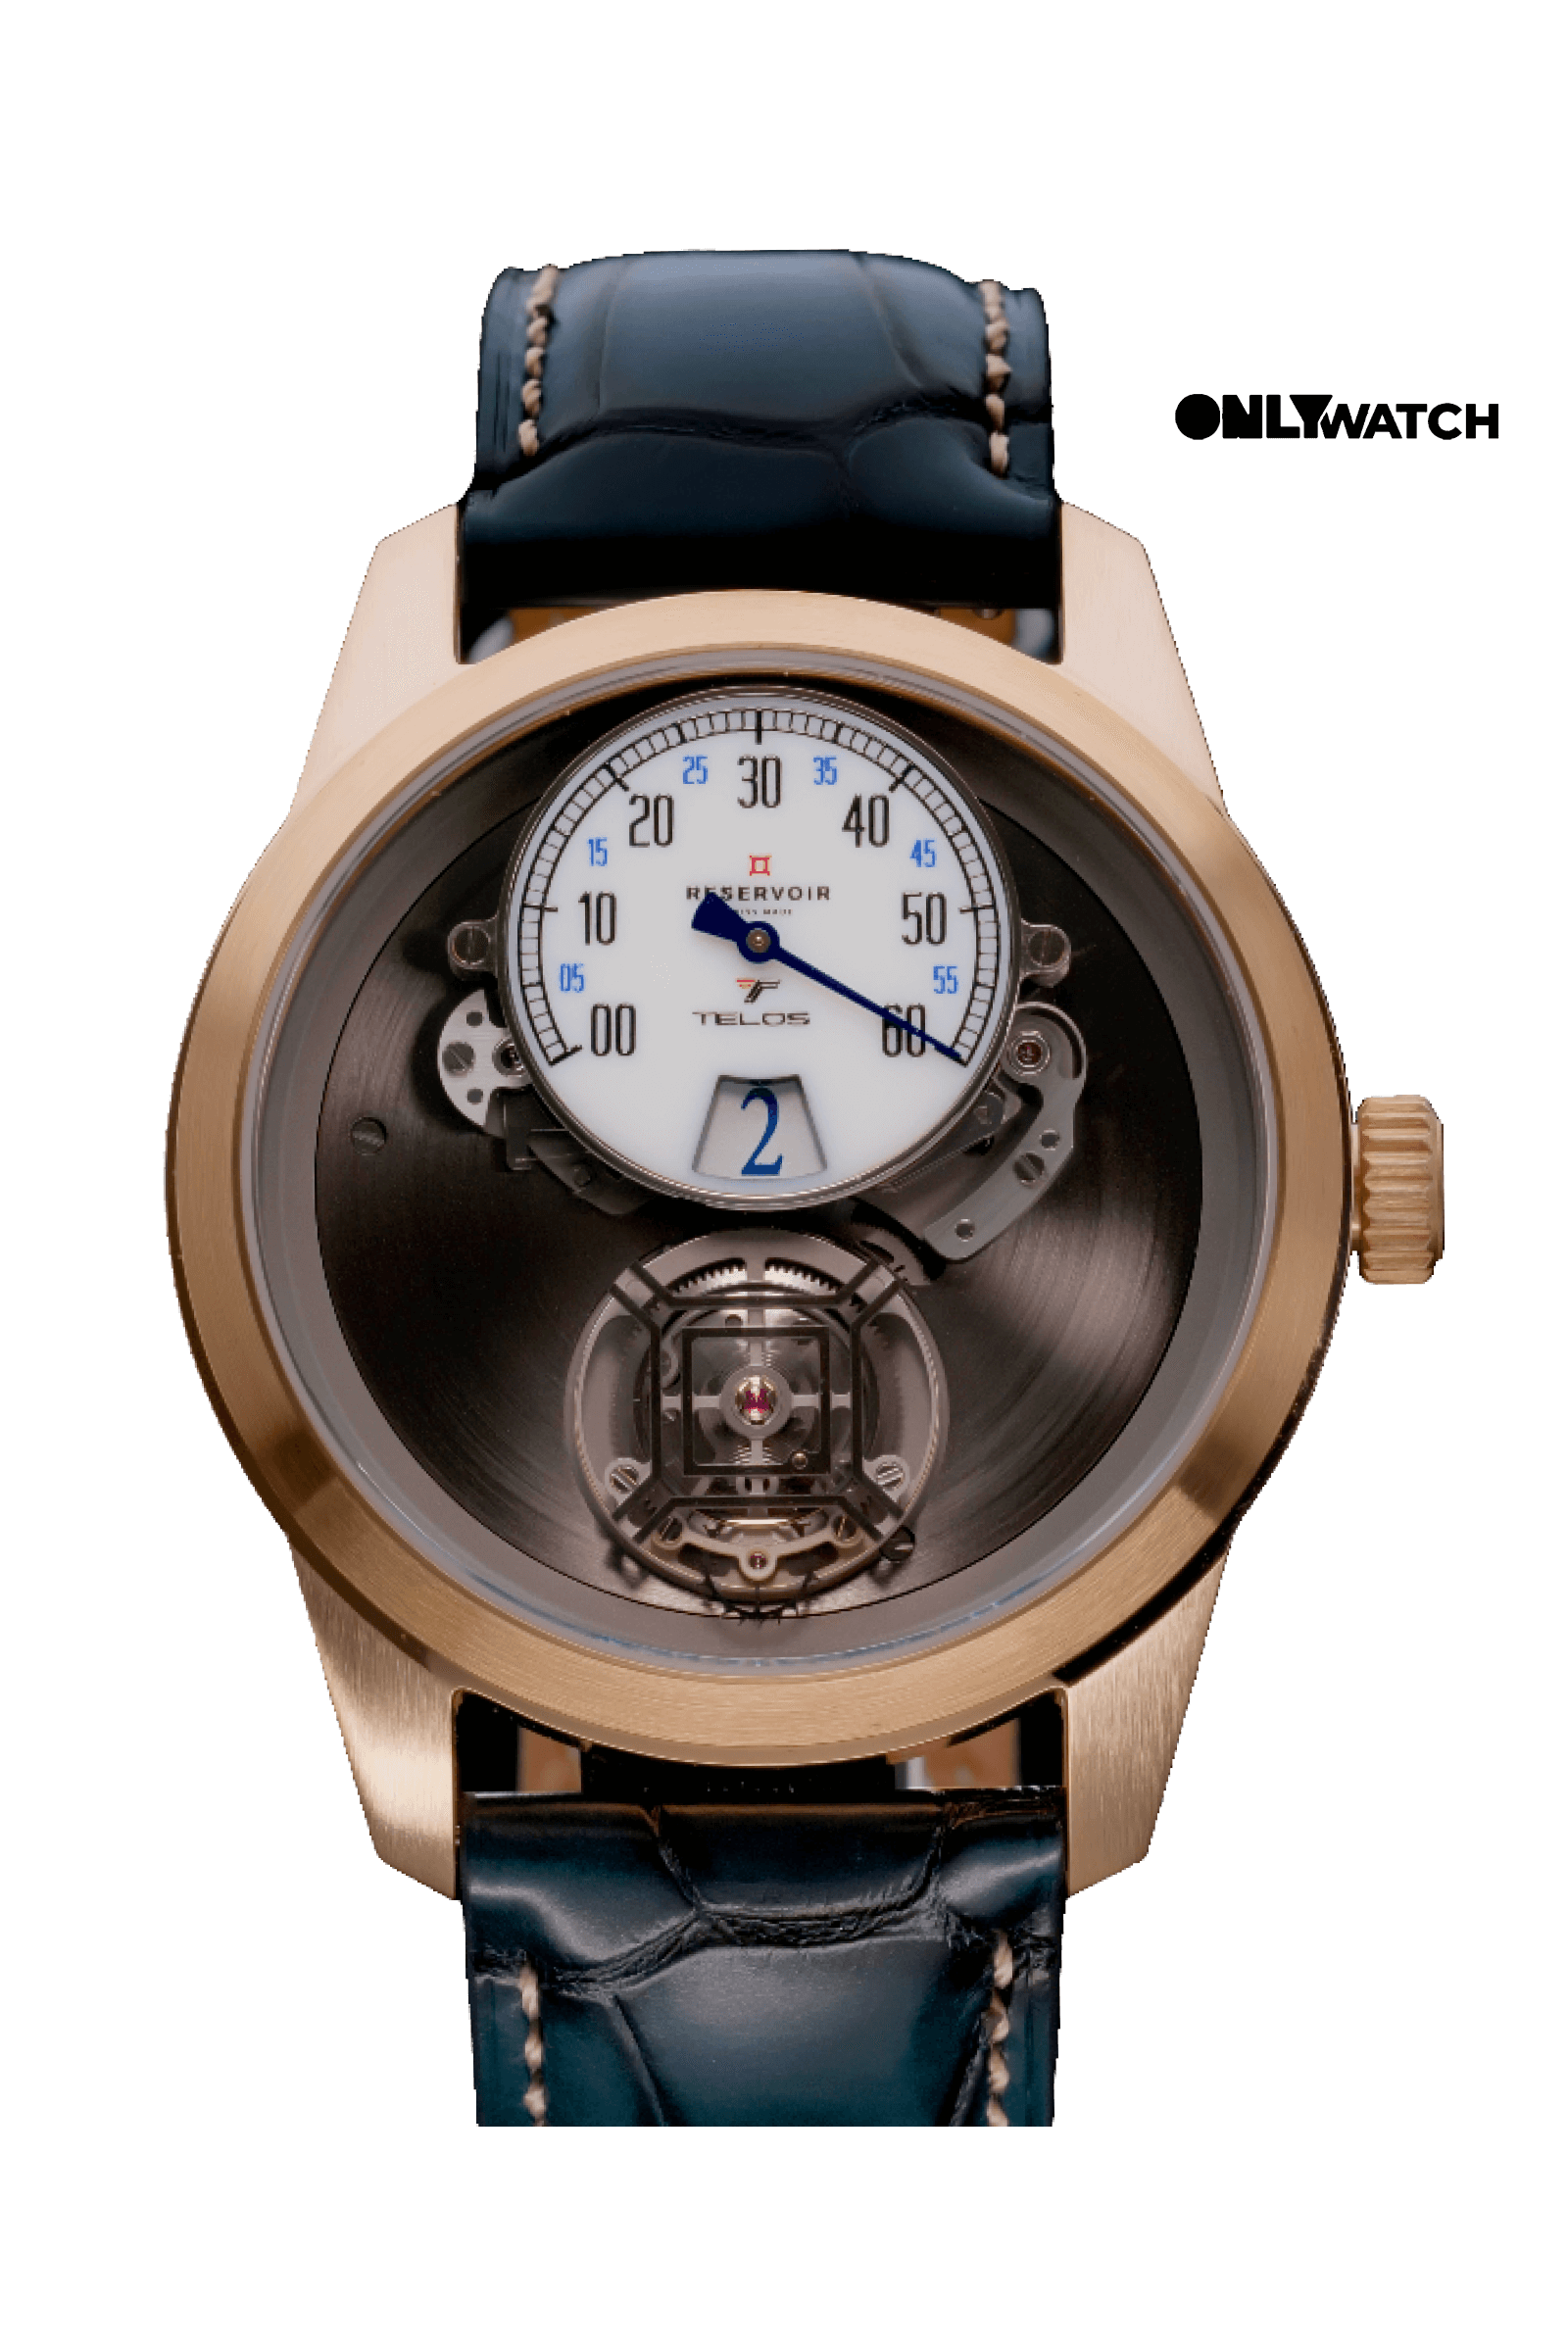 Luxury Swissmade Tourbillon Tiefenmesser Watch in Bronze, Black, Light Beige, and Light Grey-Blue.